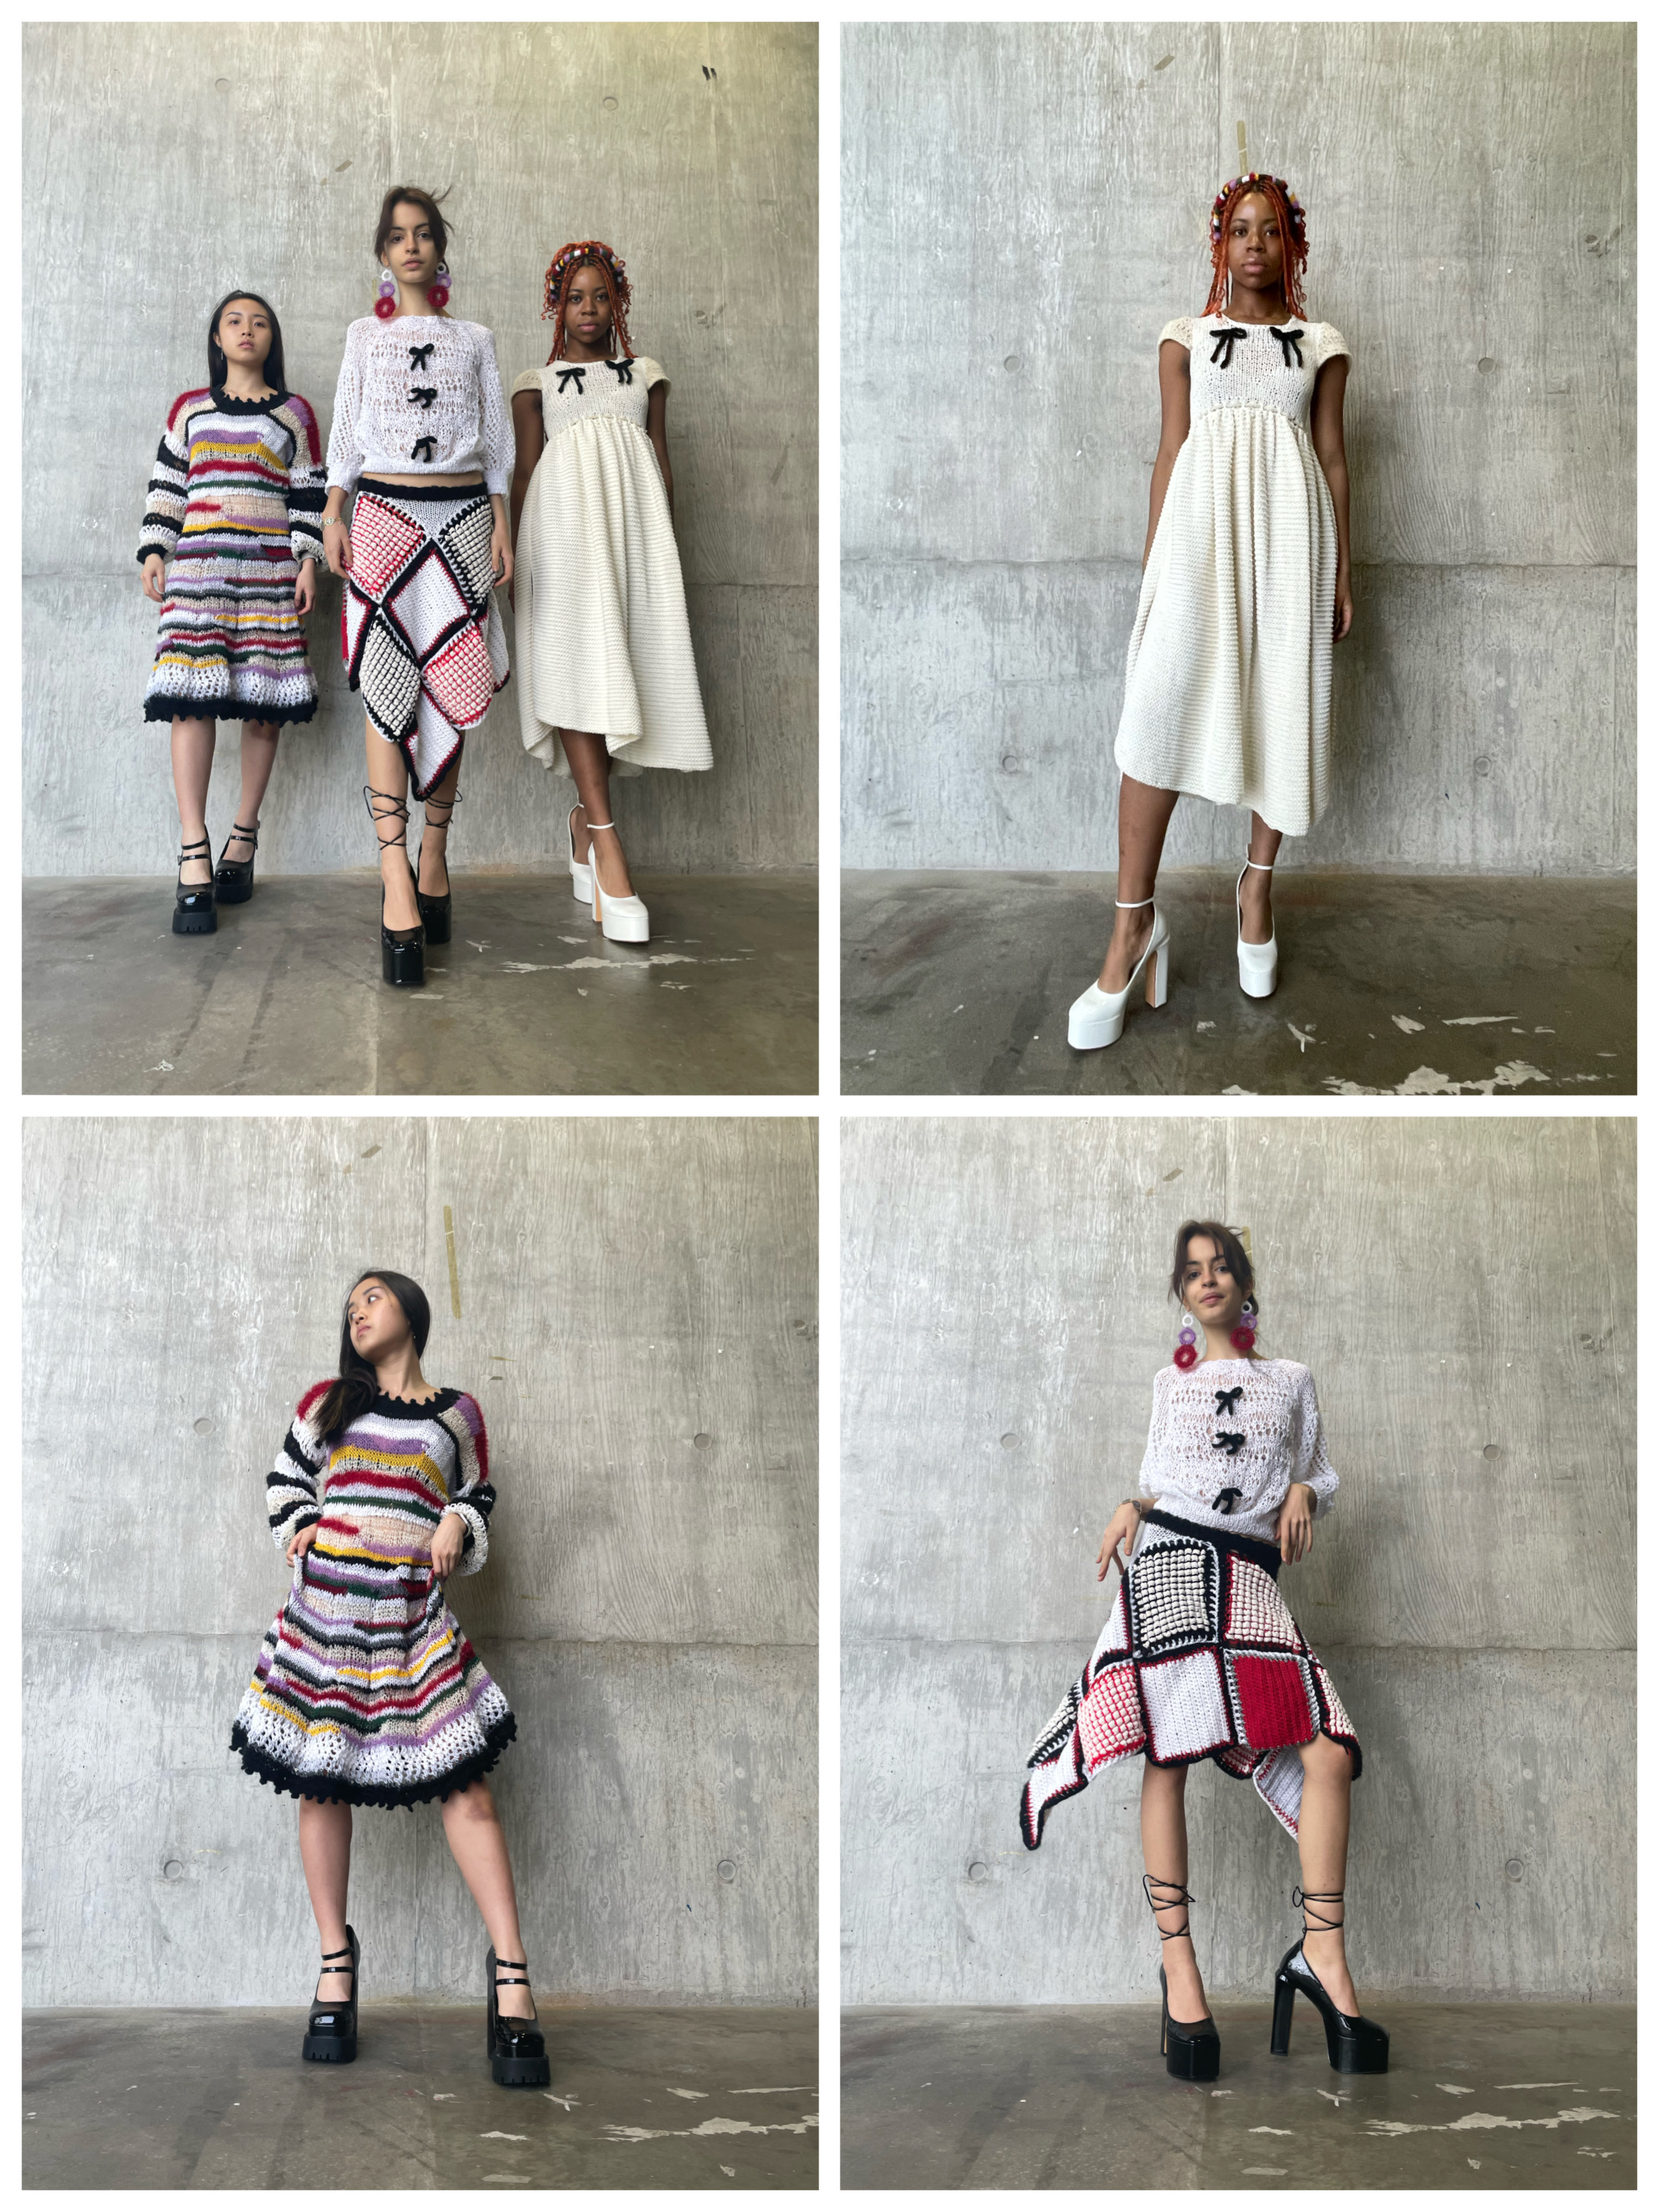 Central Saint Martins Fashion Design with Knitwear Dariana Pintilii